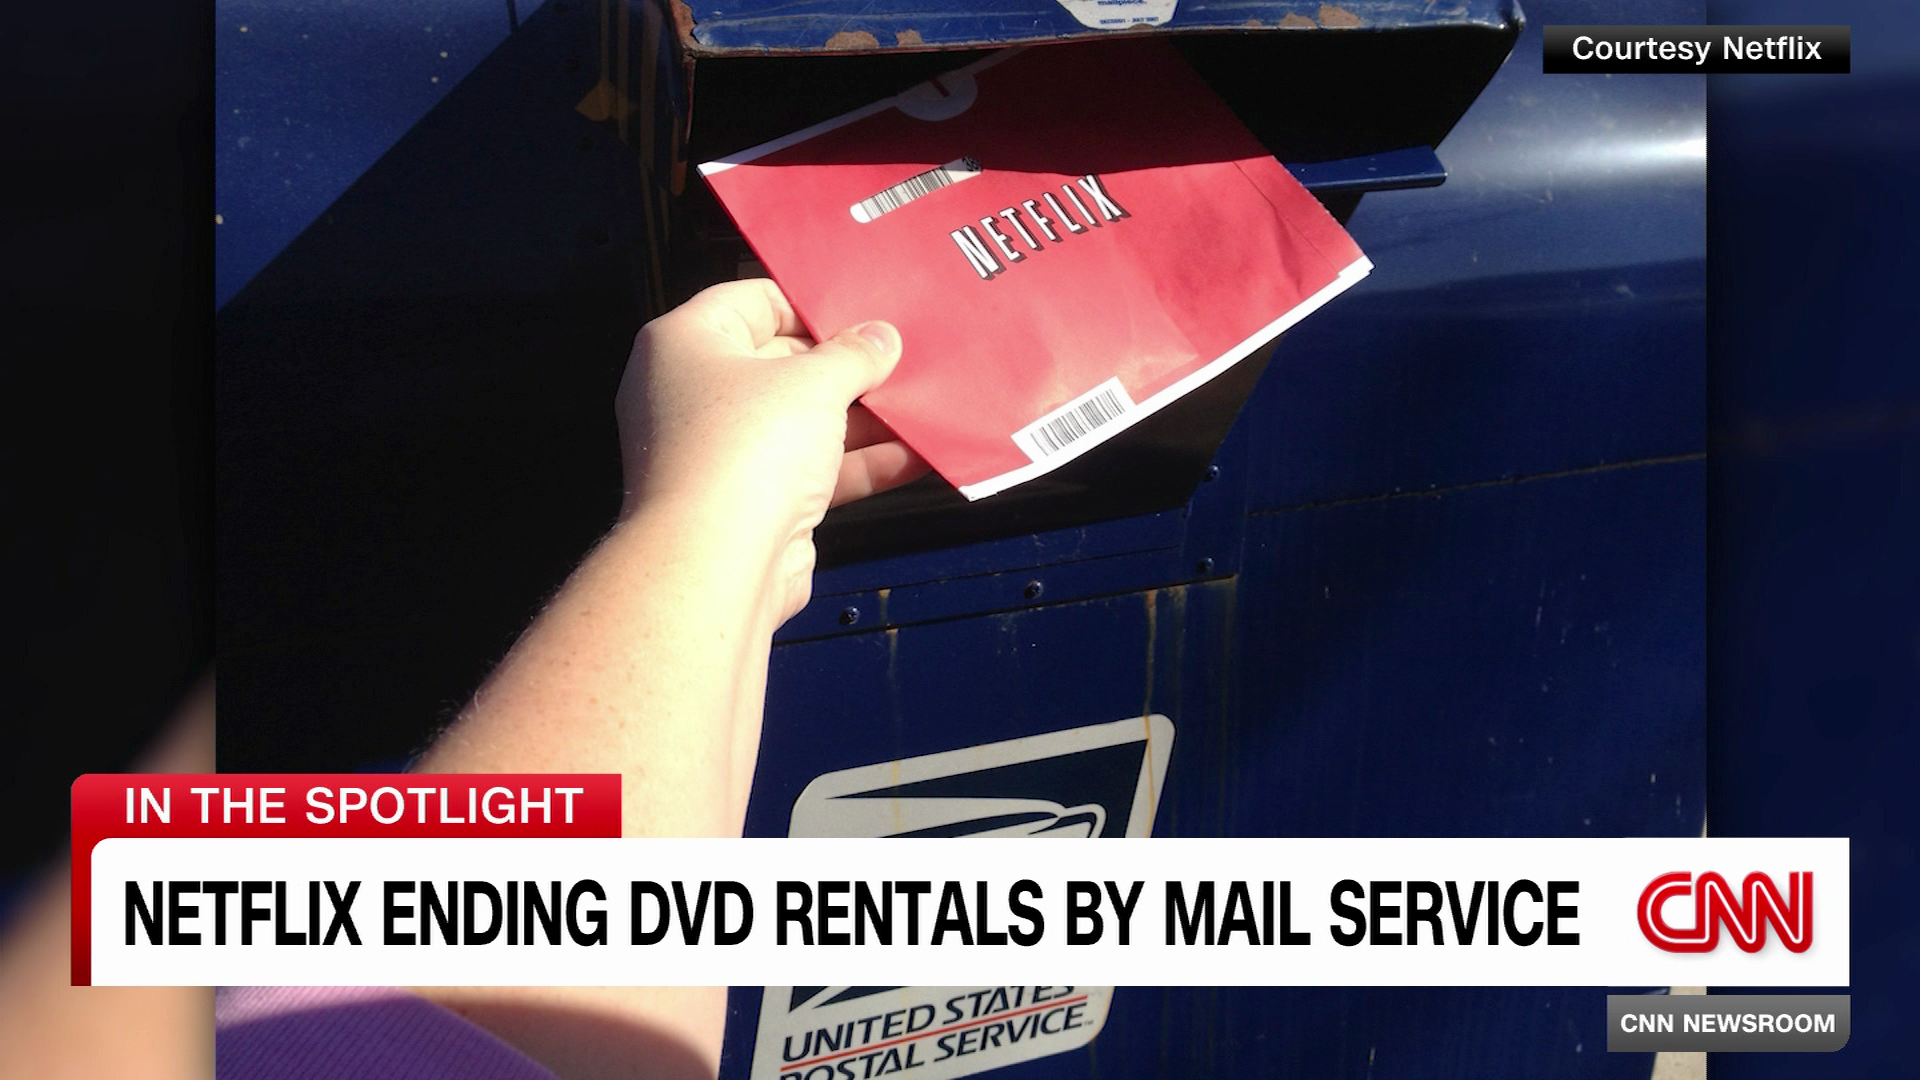 Netflix ends DVD rentals by mail